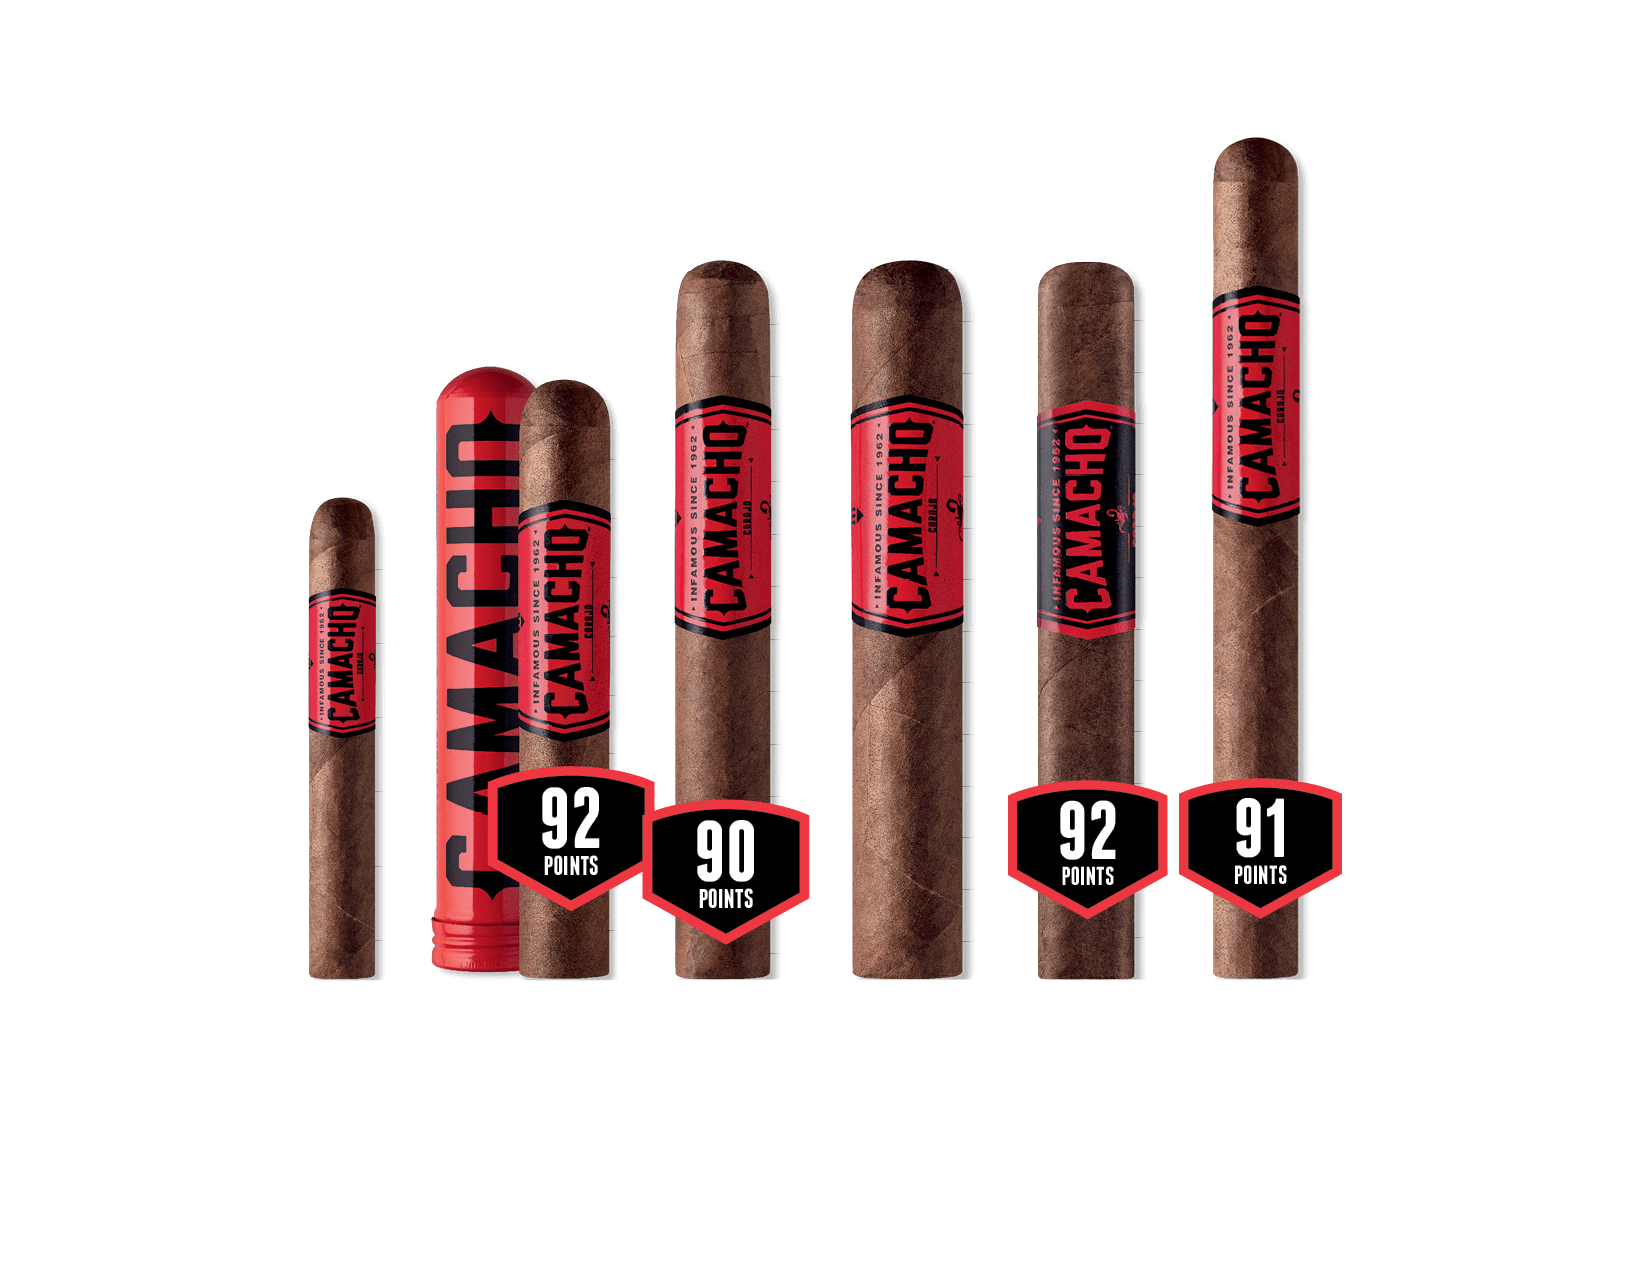 Camacho Corojo Cigar Line Up - Machito - Robusto - Toro - Gordo (60x6) - Toro Box Pressed - Churchill